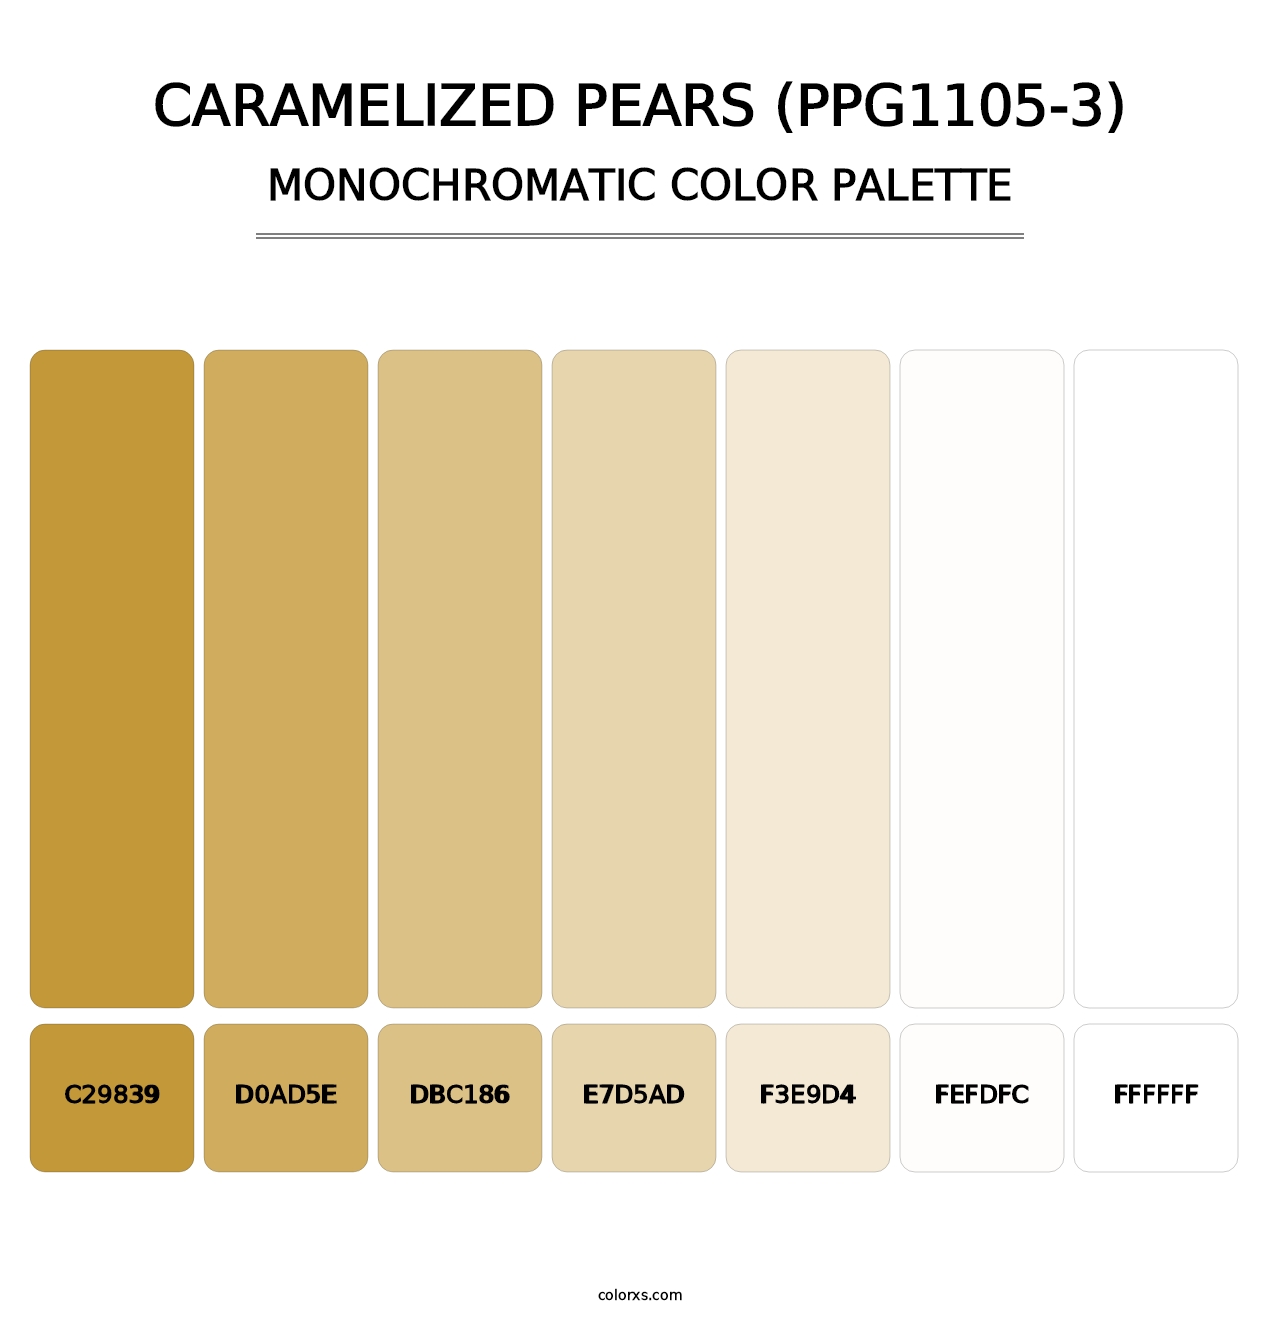 Caramelized Pears (PPG1105-3) - Monochromatic Color Palette